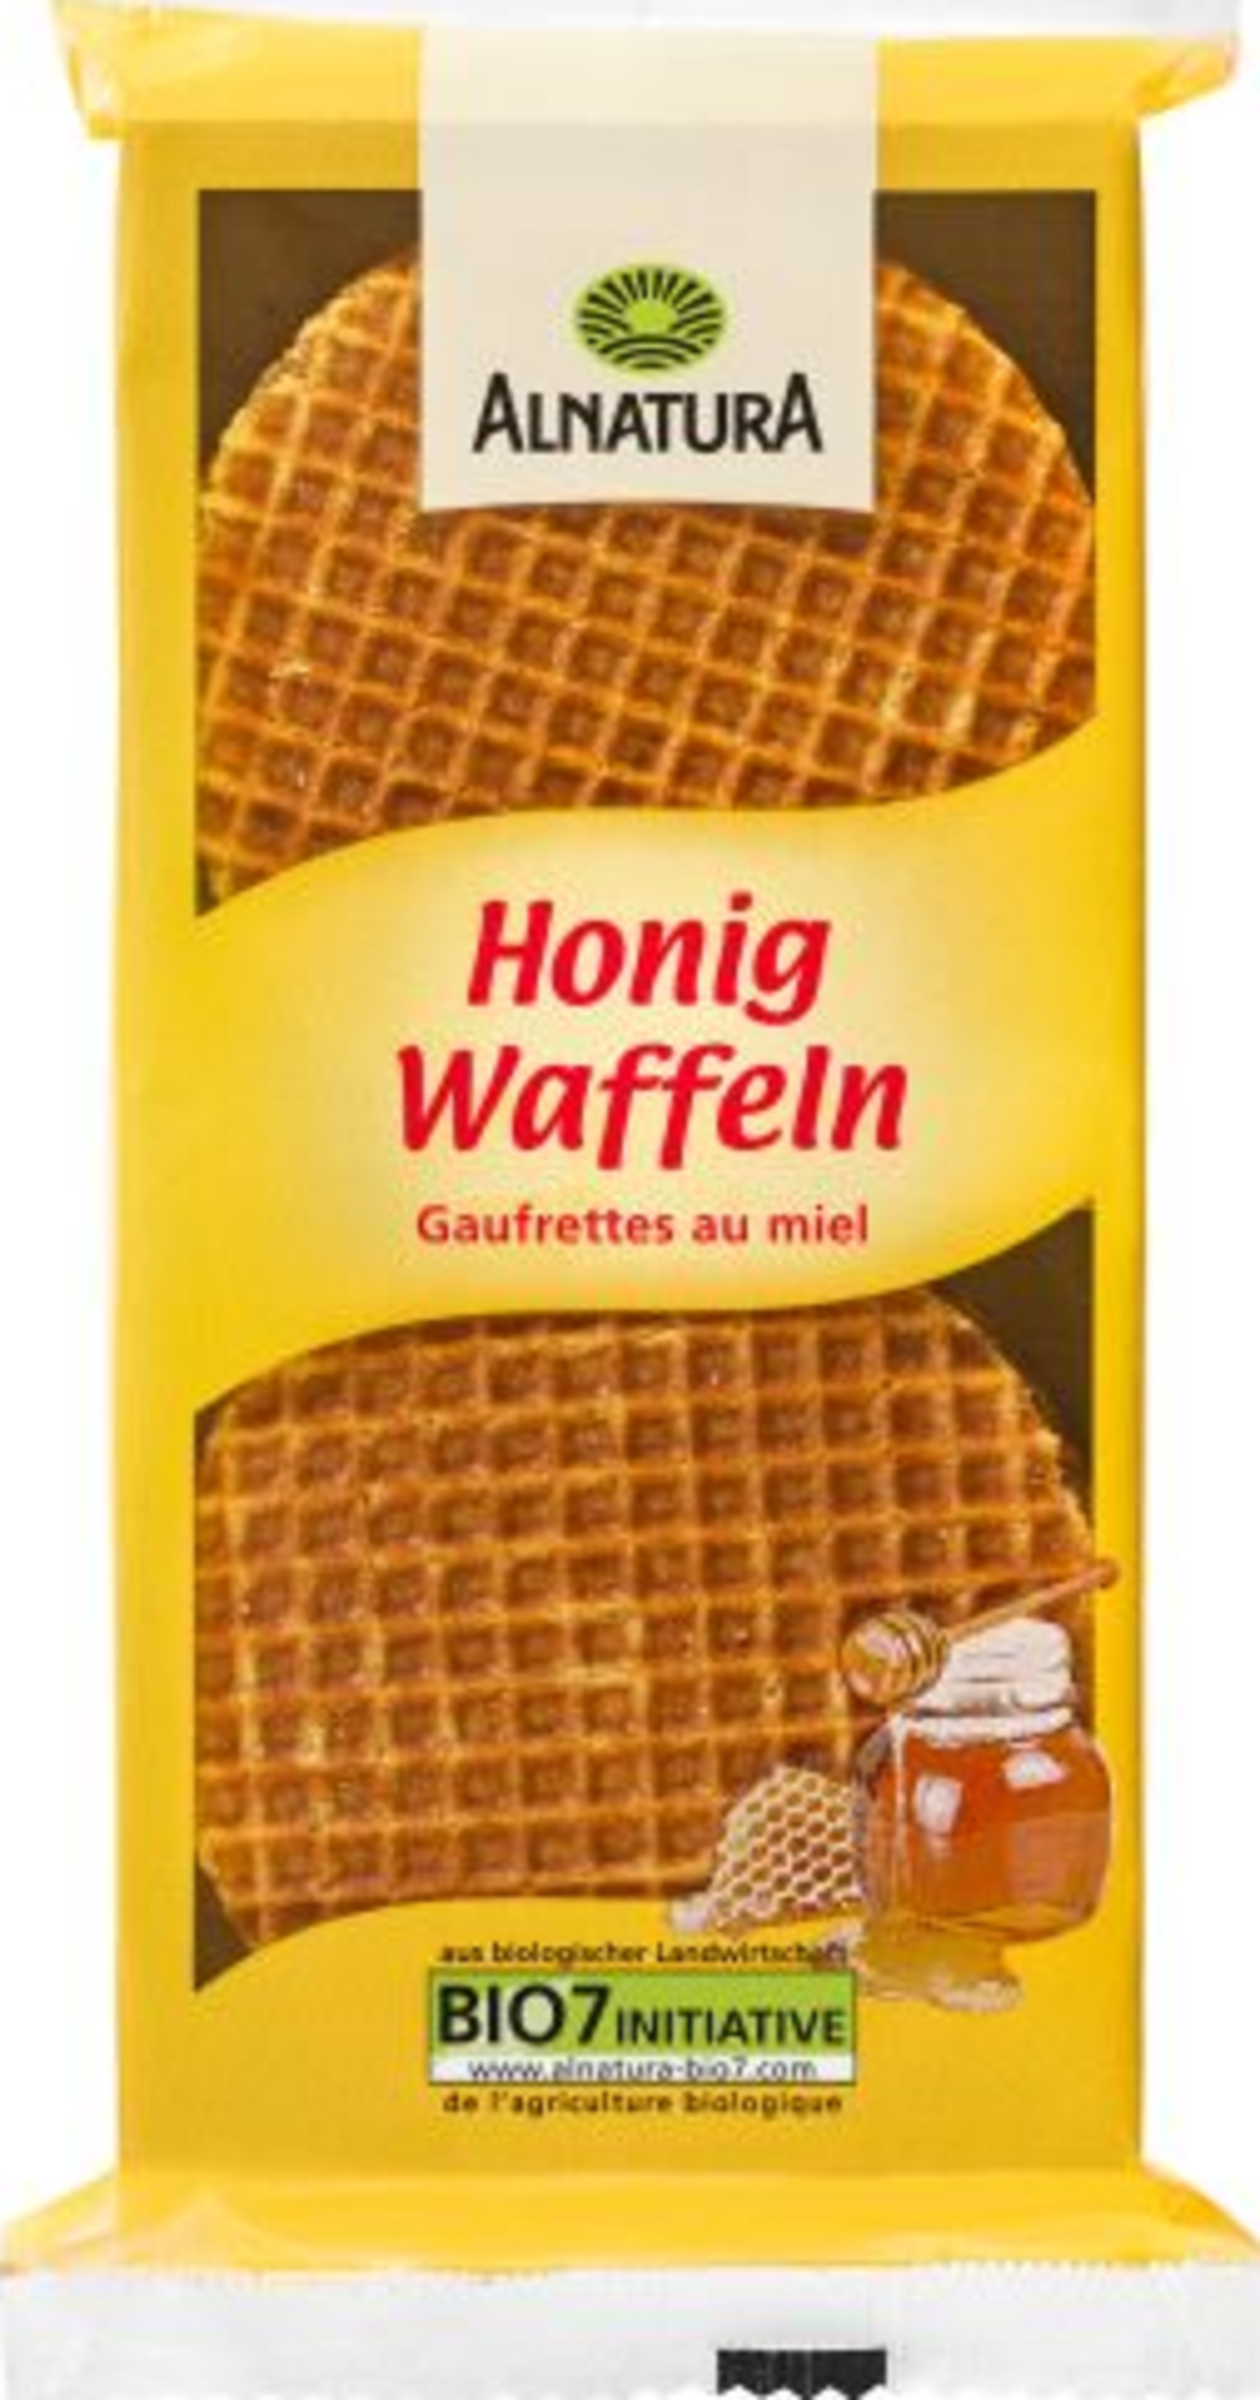 Organic honey waffles